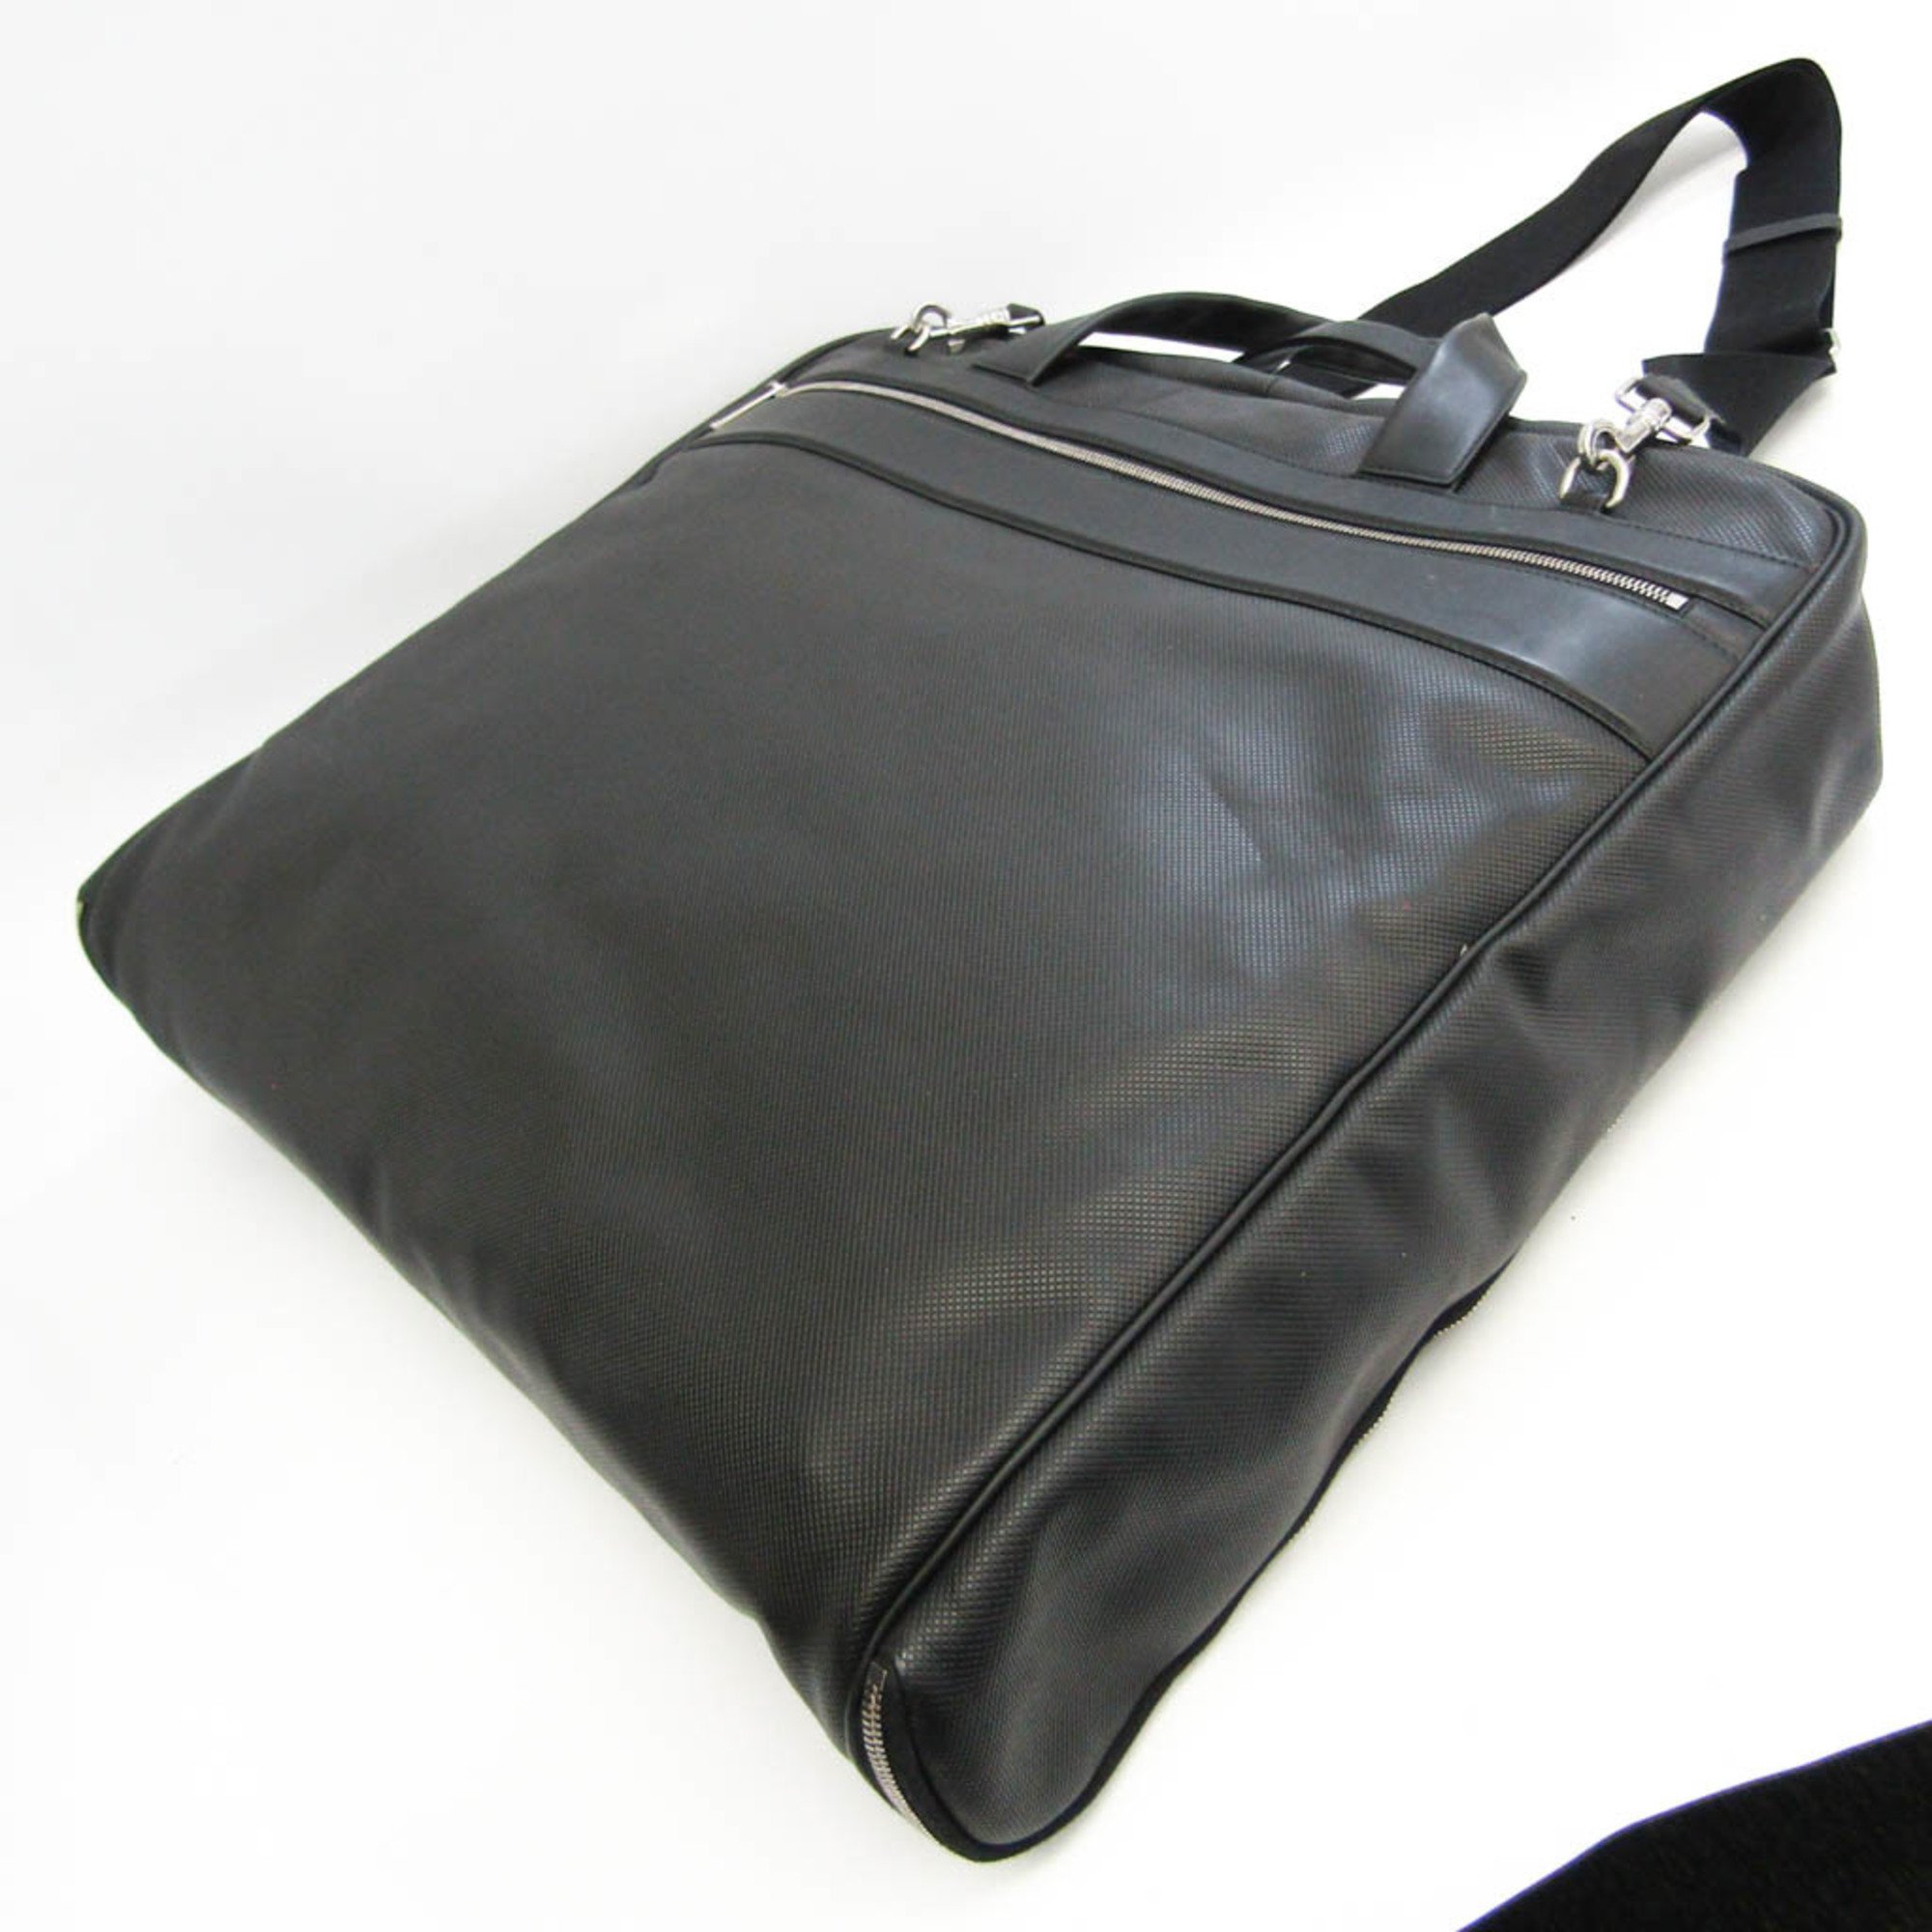 Bottega Veneta Bolsa Marco Polo Leather Large 573492 Men's Leather Handbag,Shoulder Bag Black